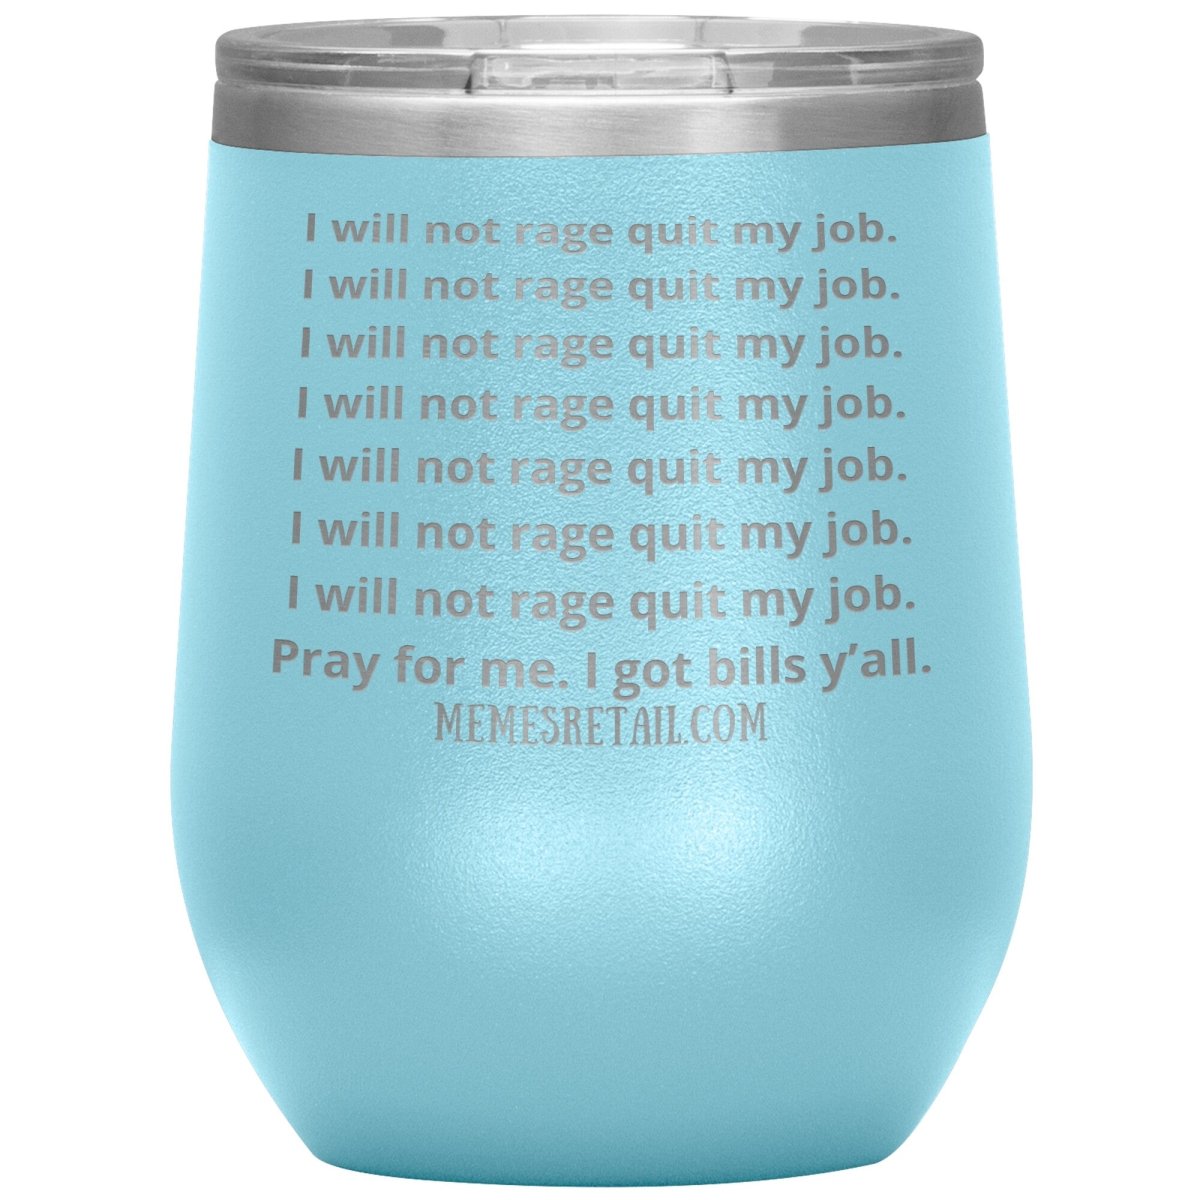 I will not rage quit my job Tumblers, 12oz Wine Insulated Tumbler / Light Blue - MemesRetail.com